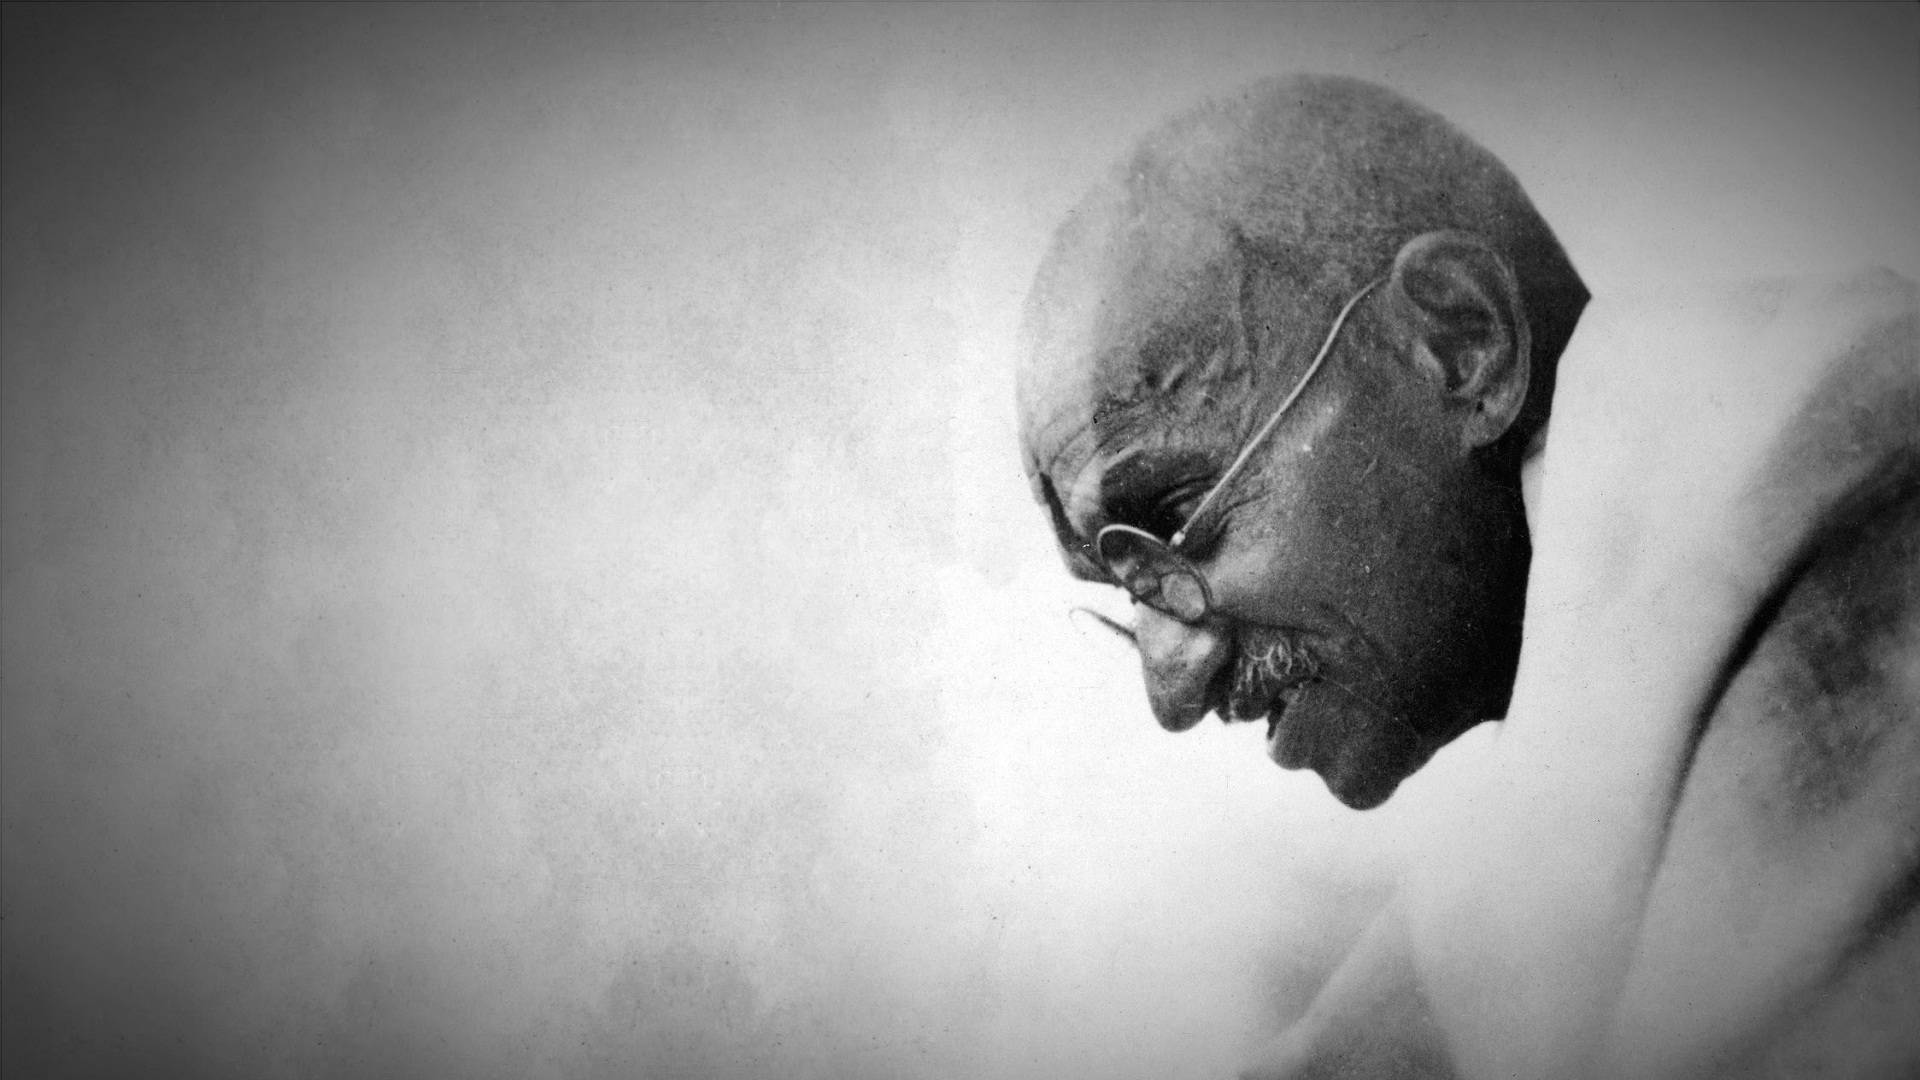 The Enlightened Peacemaker - Mahatma Gandhi Background